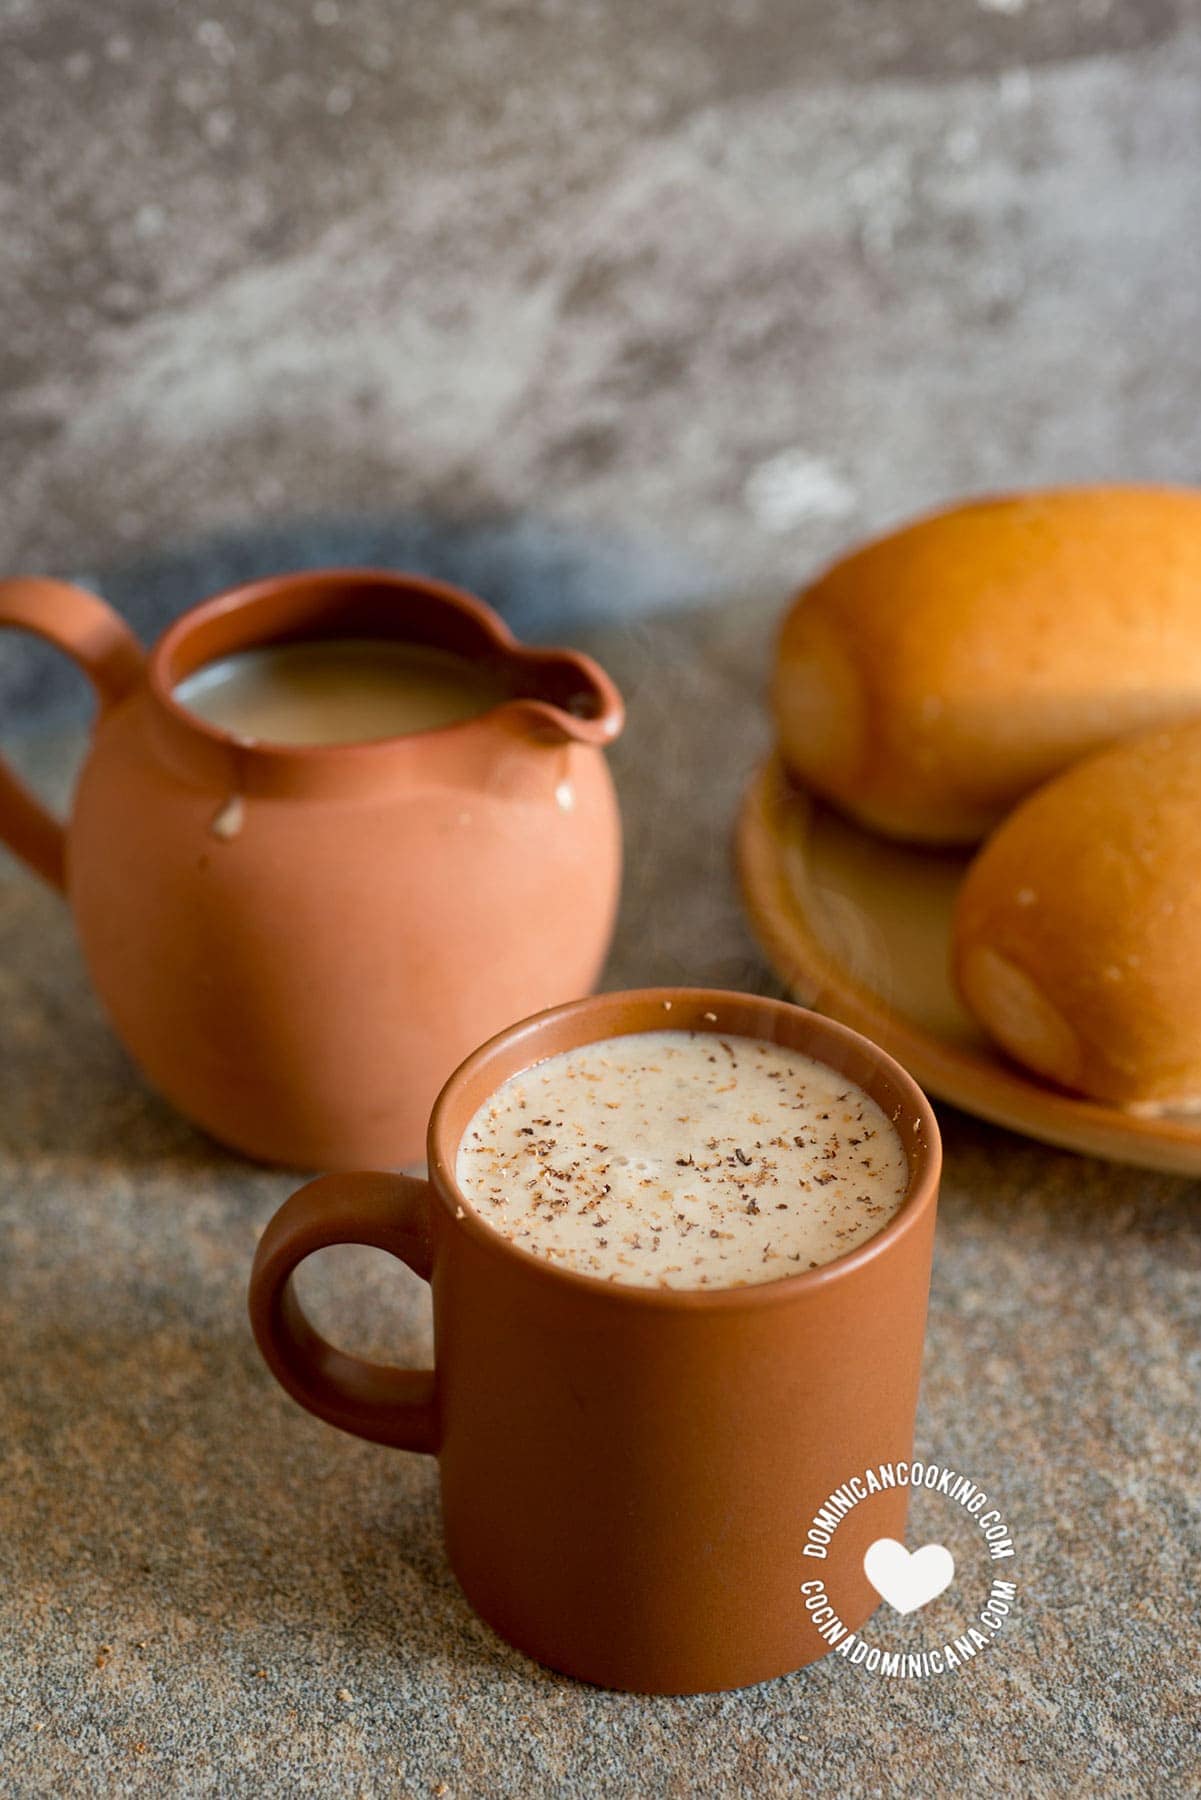 Avena caliente (hot oat and milk hot drink).